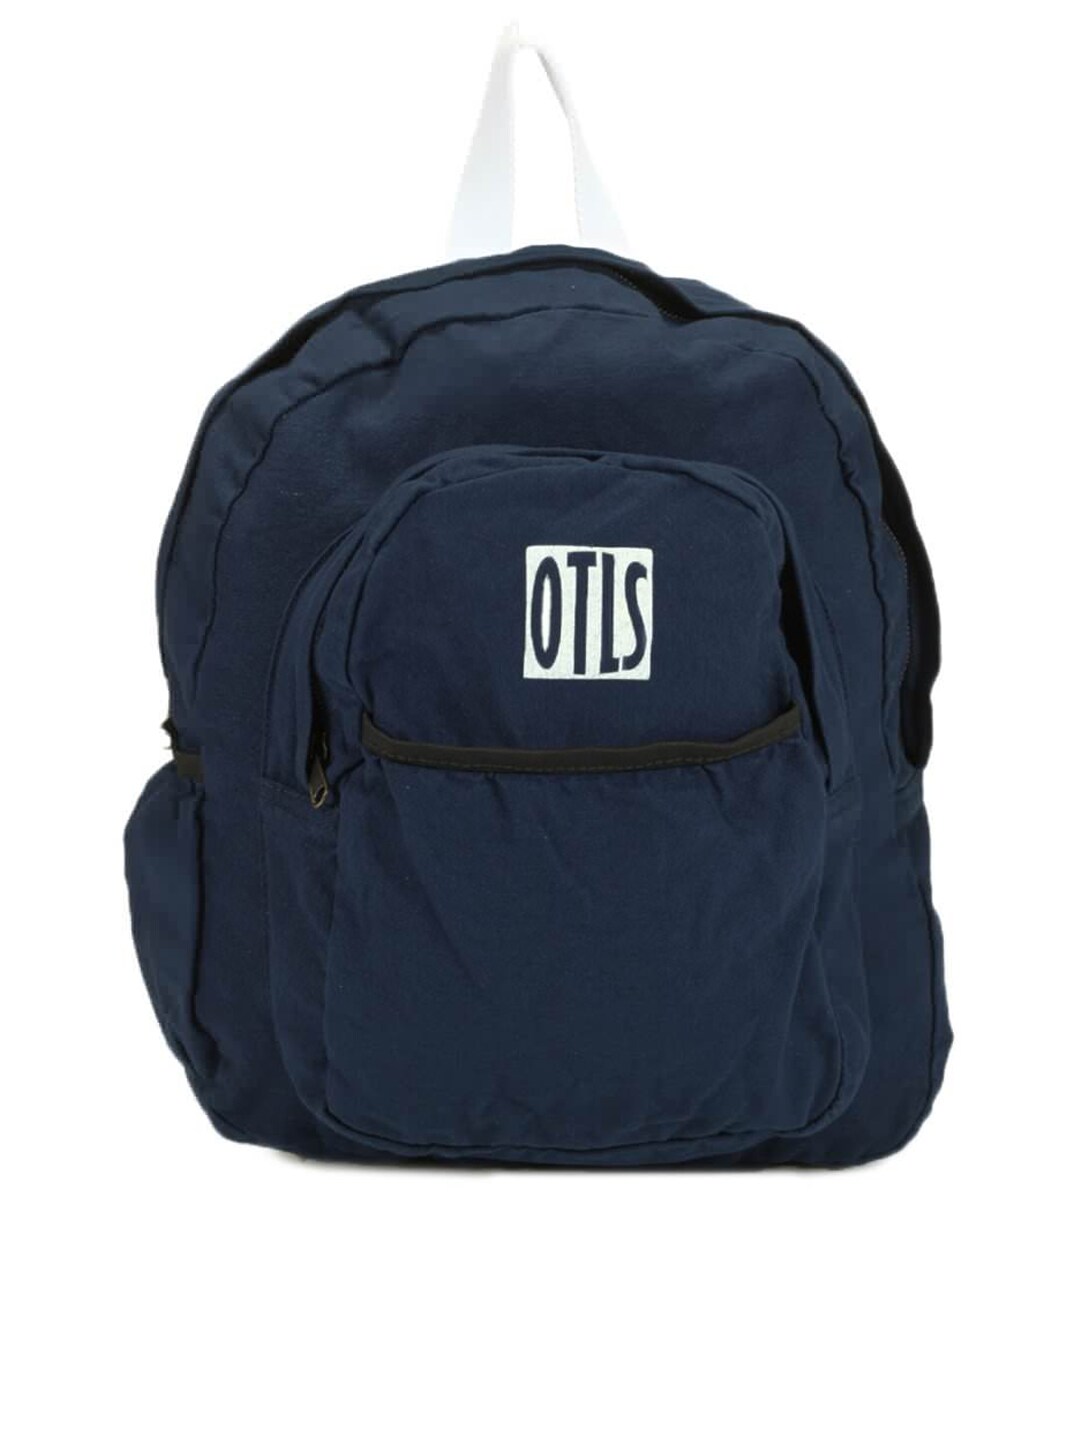 OTLS Unisex Blue Backpack